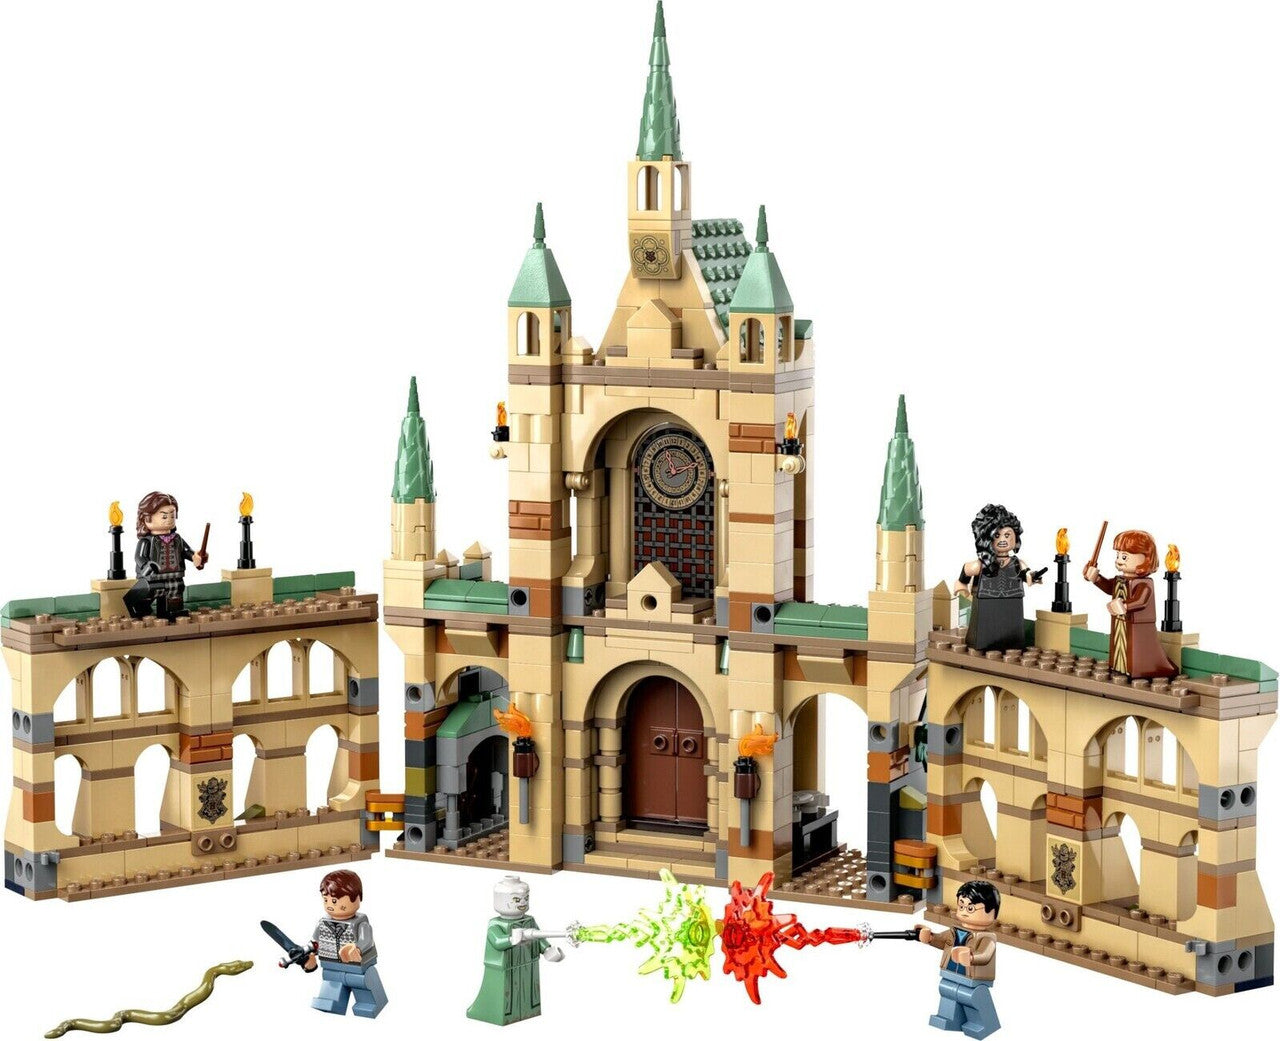 LEGO Harry Potter The Battle of Hogwarts 76415